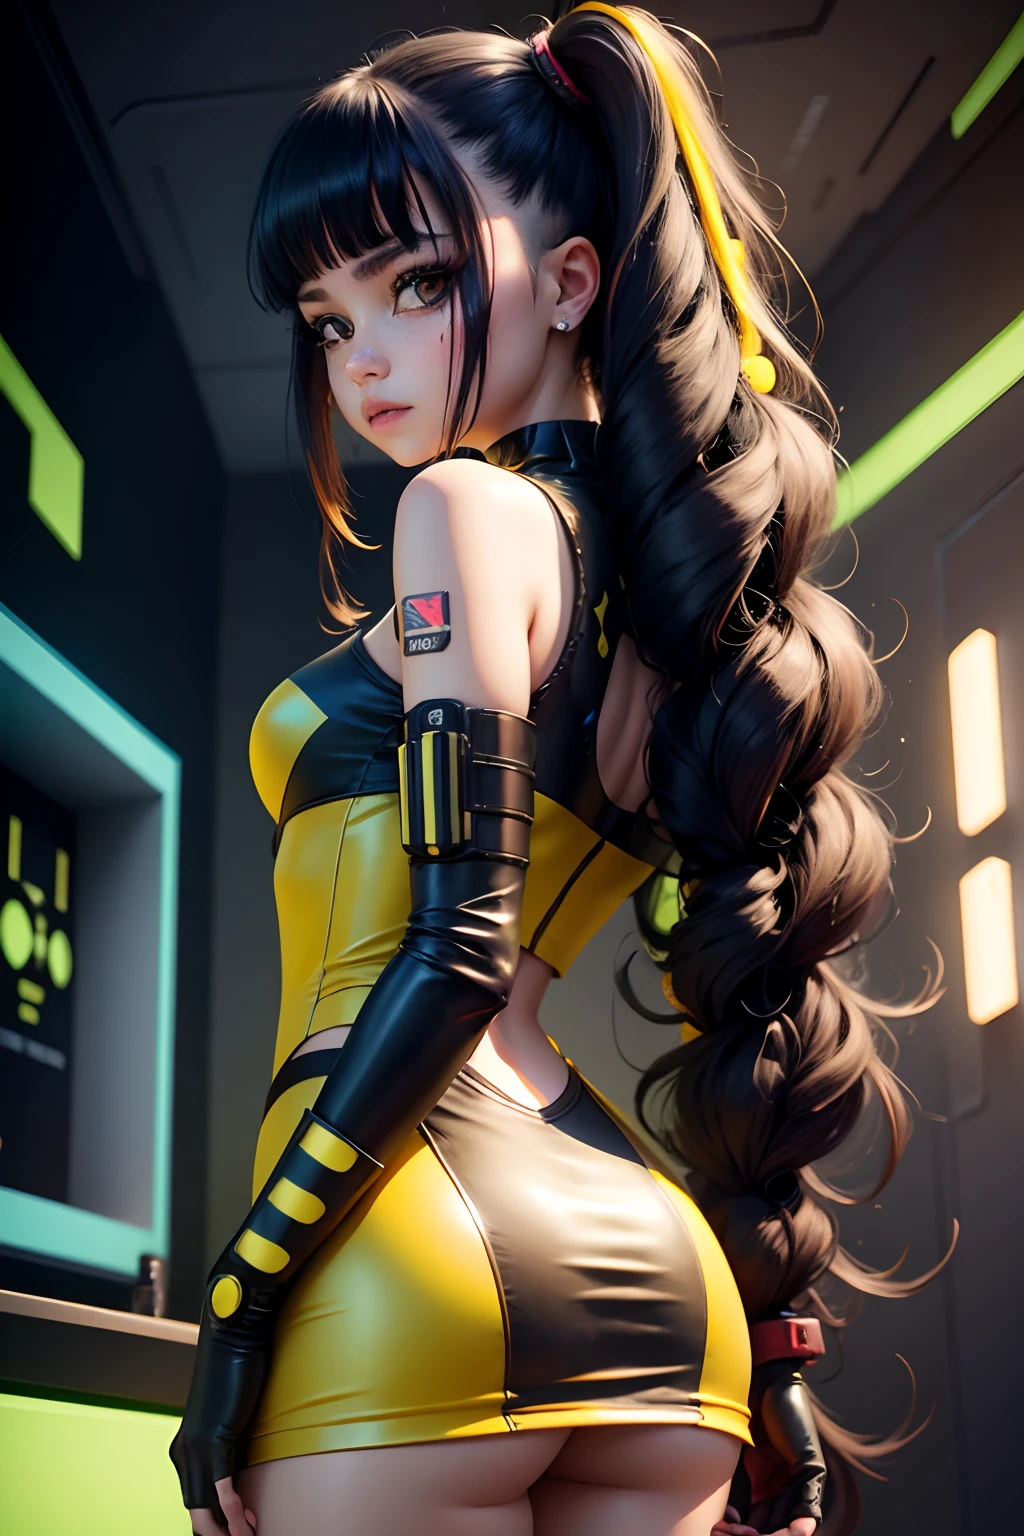 garota usando vestido cyberpunk amarelo , meio futurista, misto de grande mancha de joaninha, cabelo preto longo